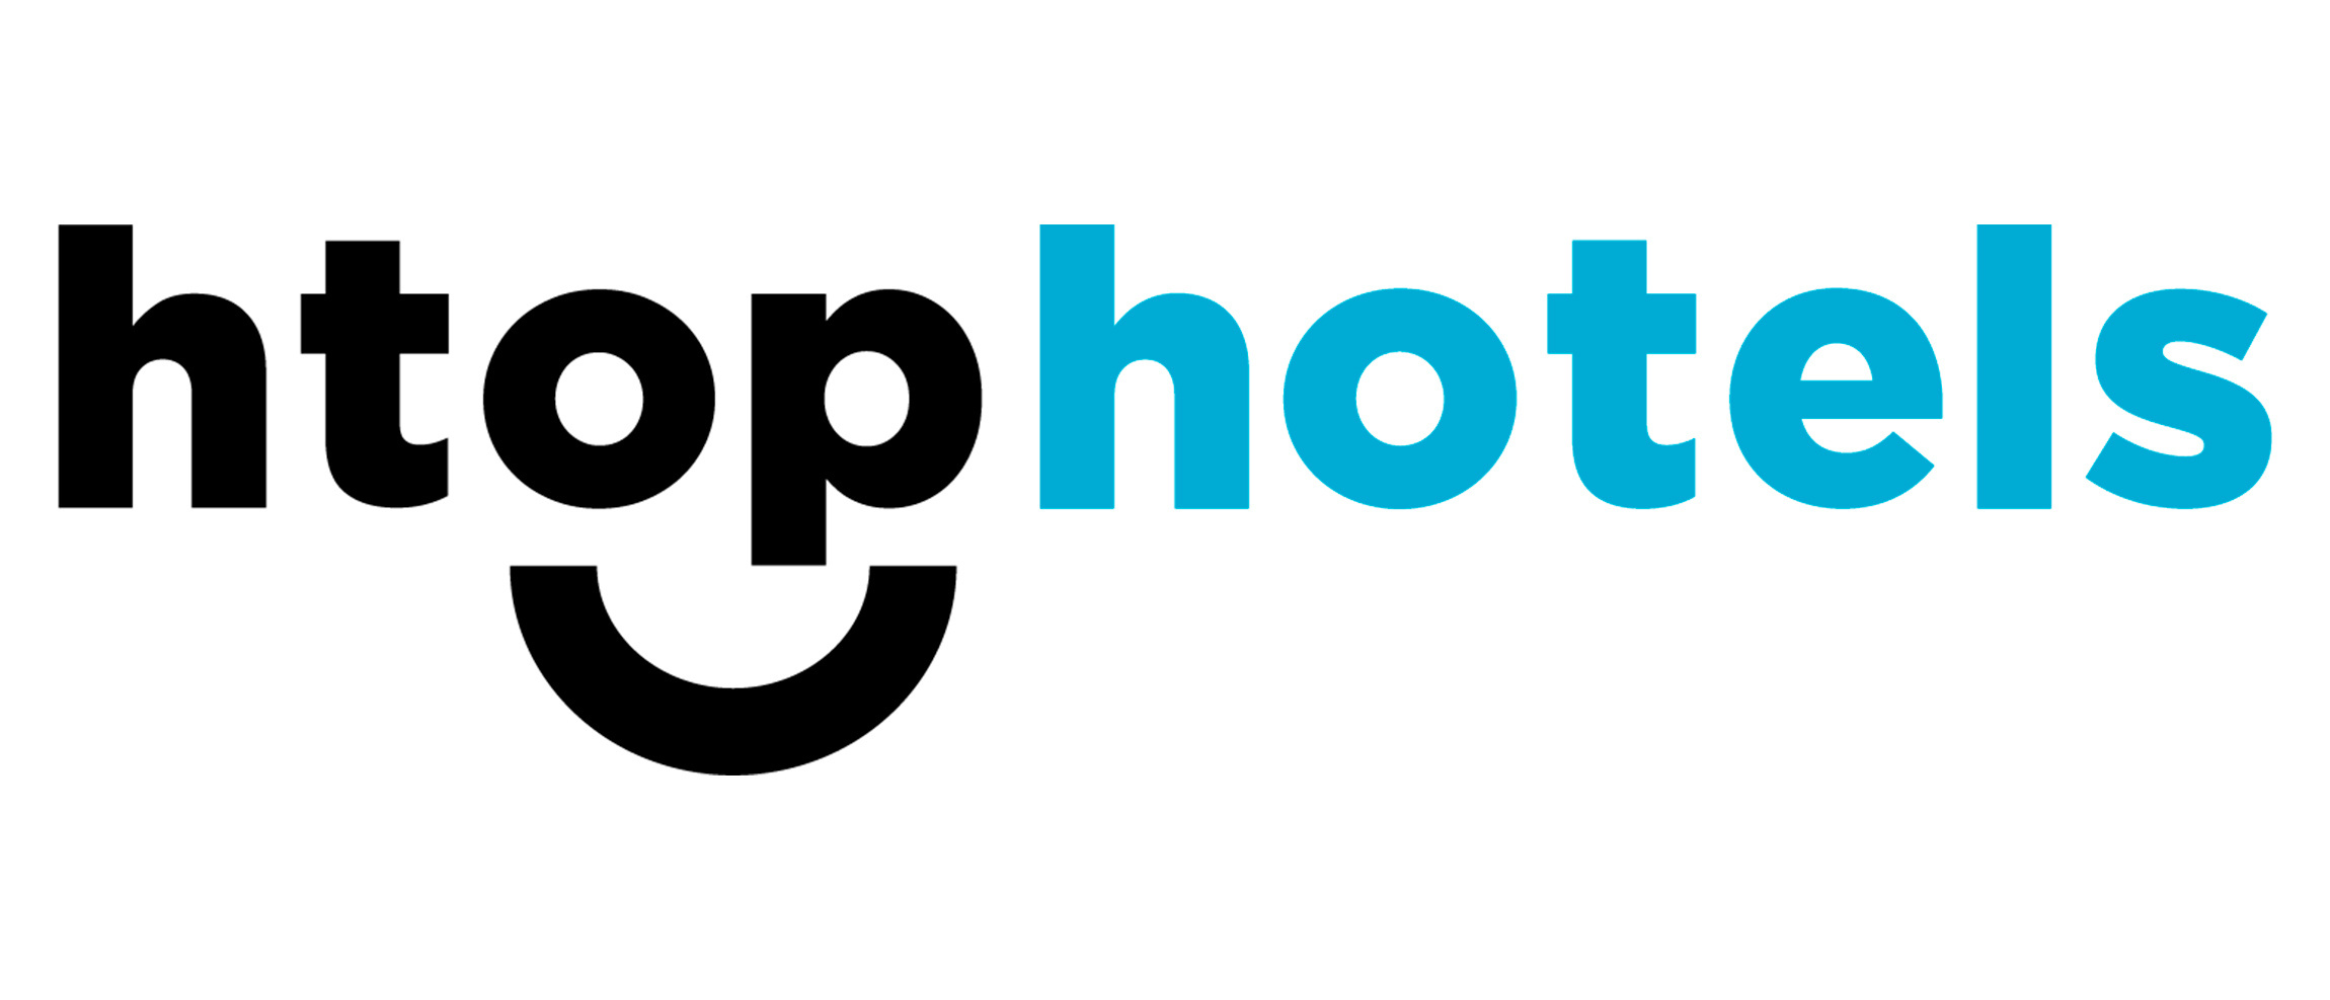 htop hotels